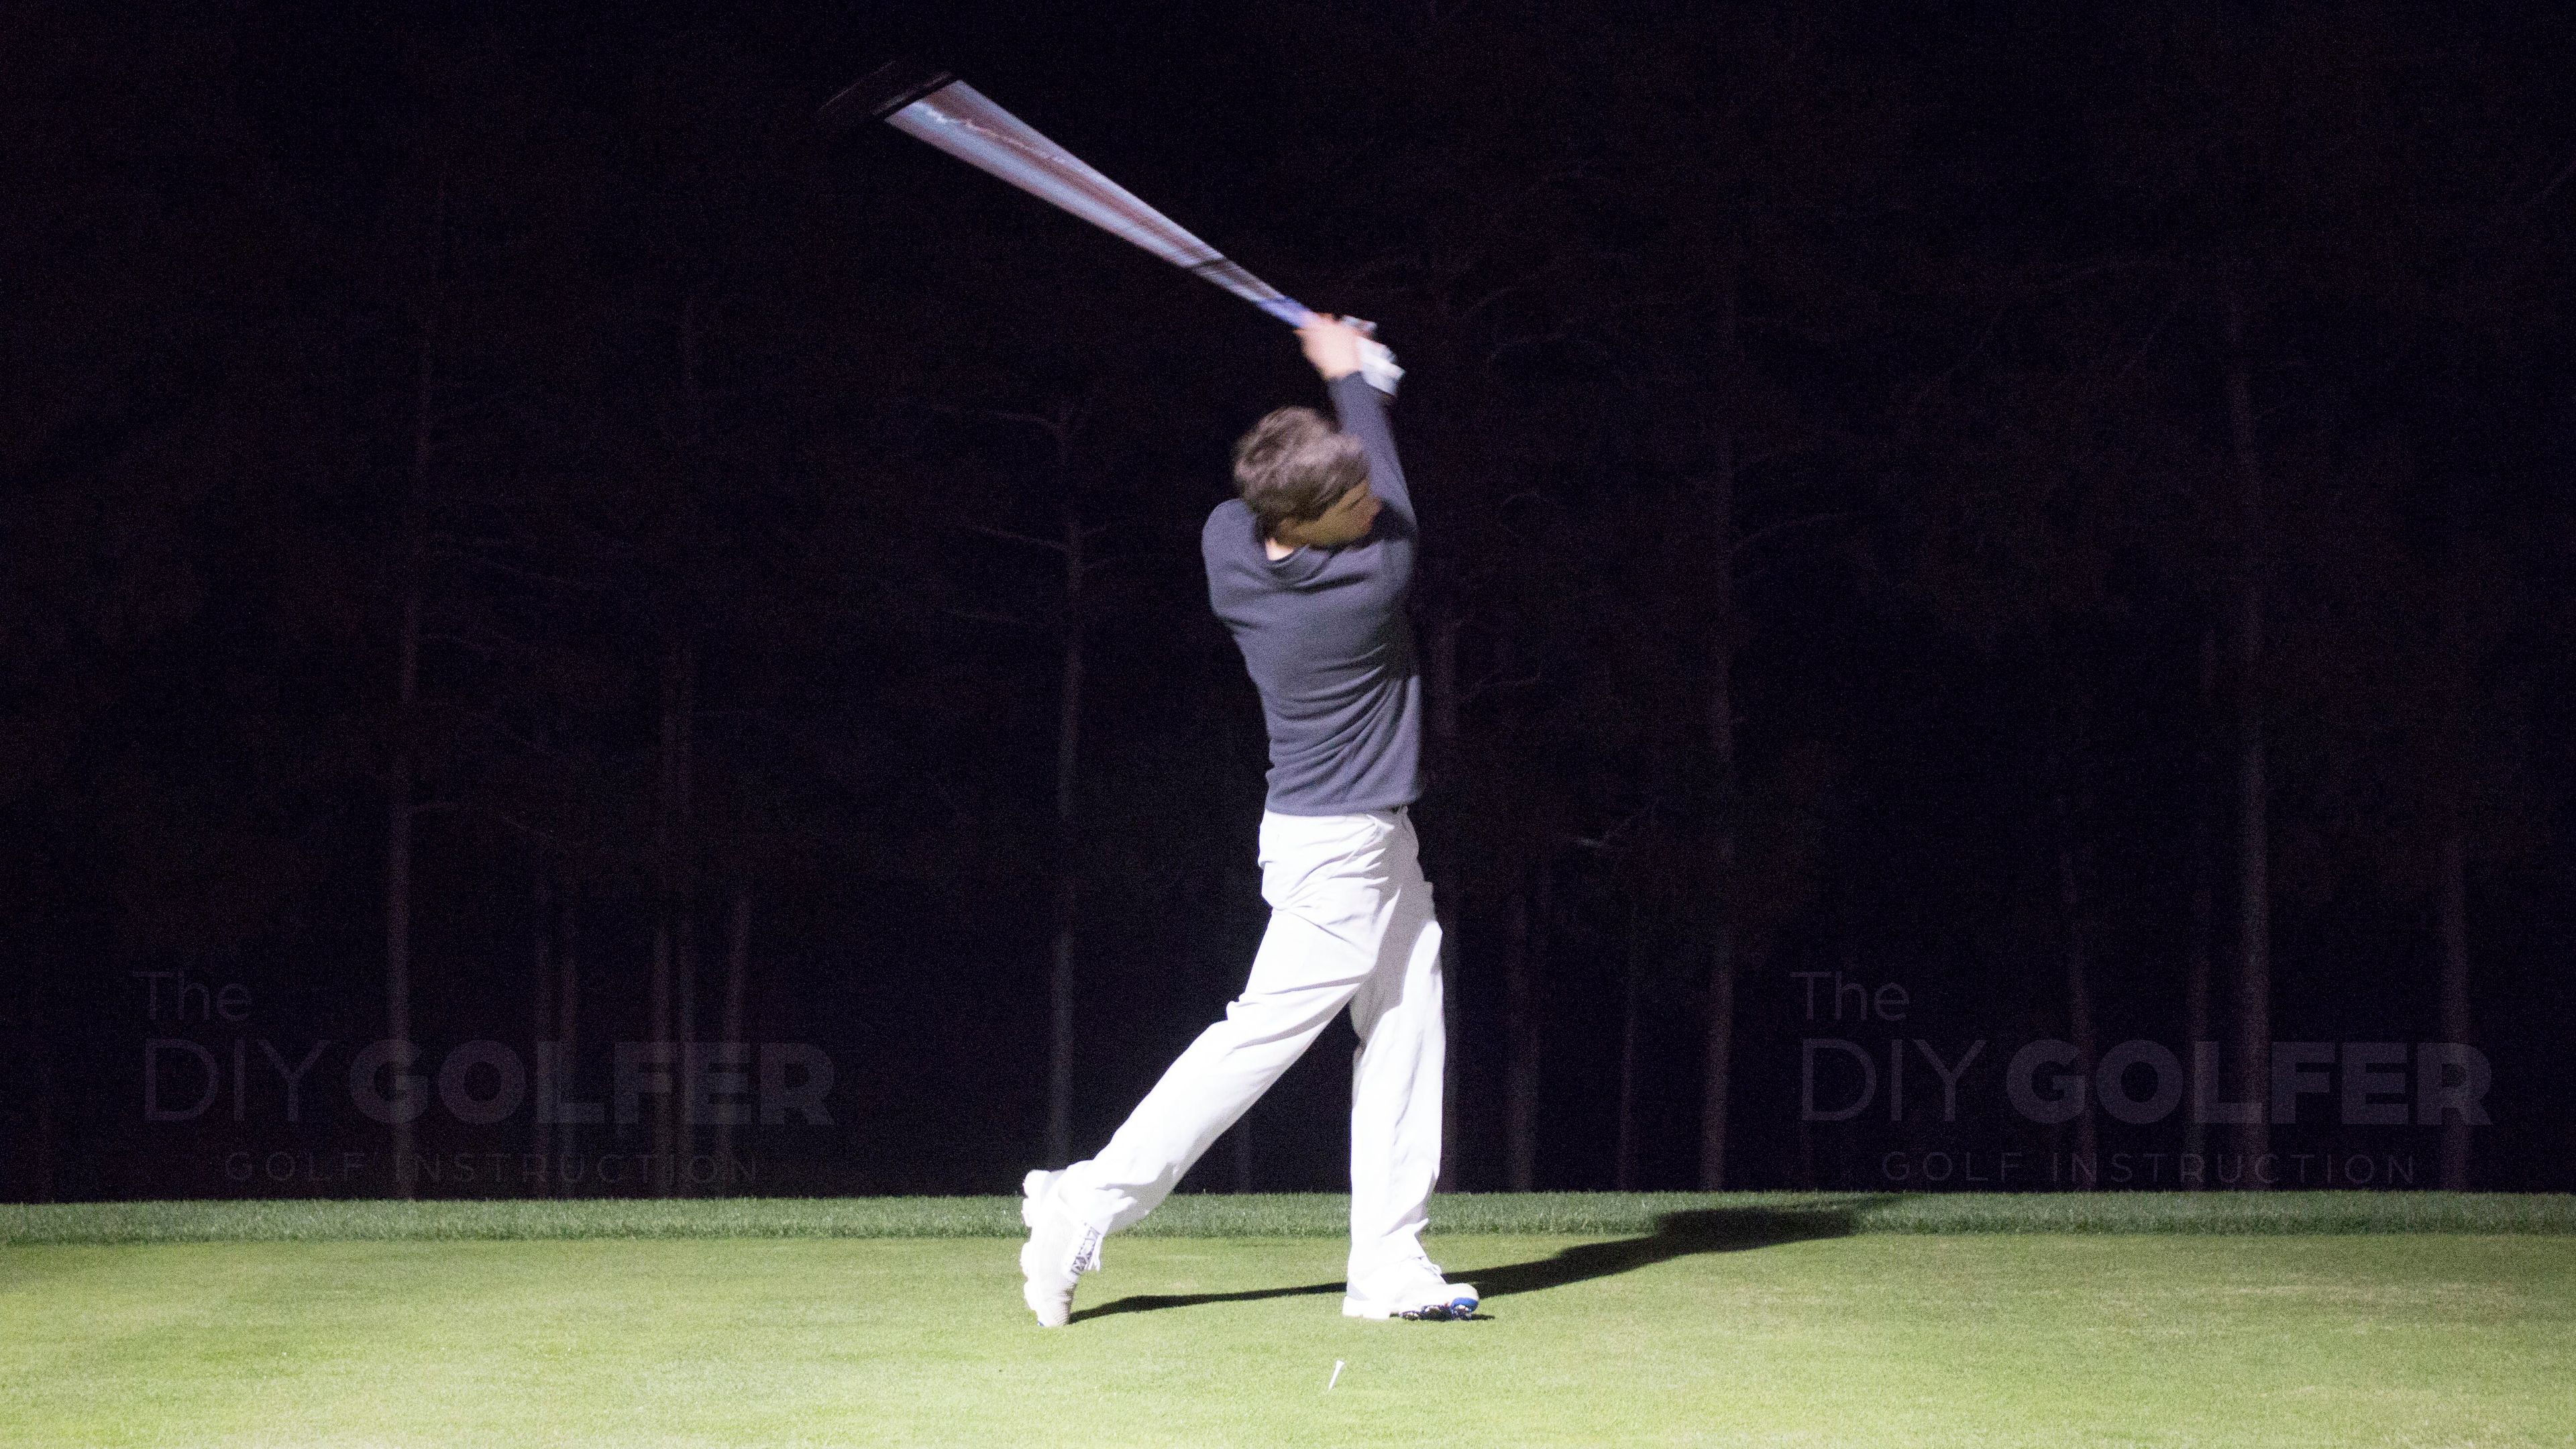 Night Golf Swing Photo: Follow Through